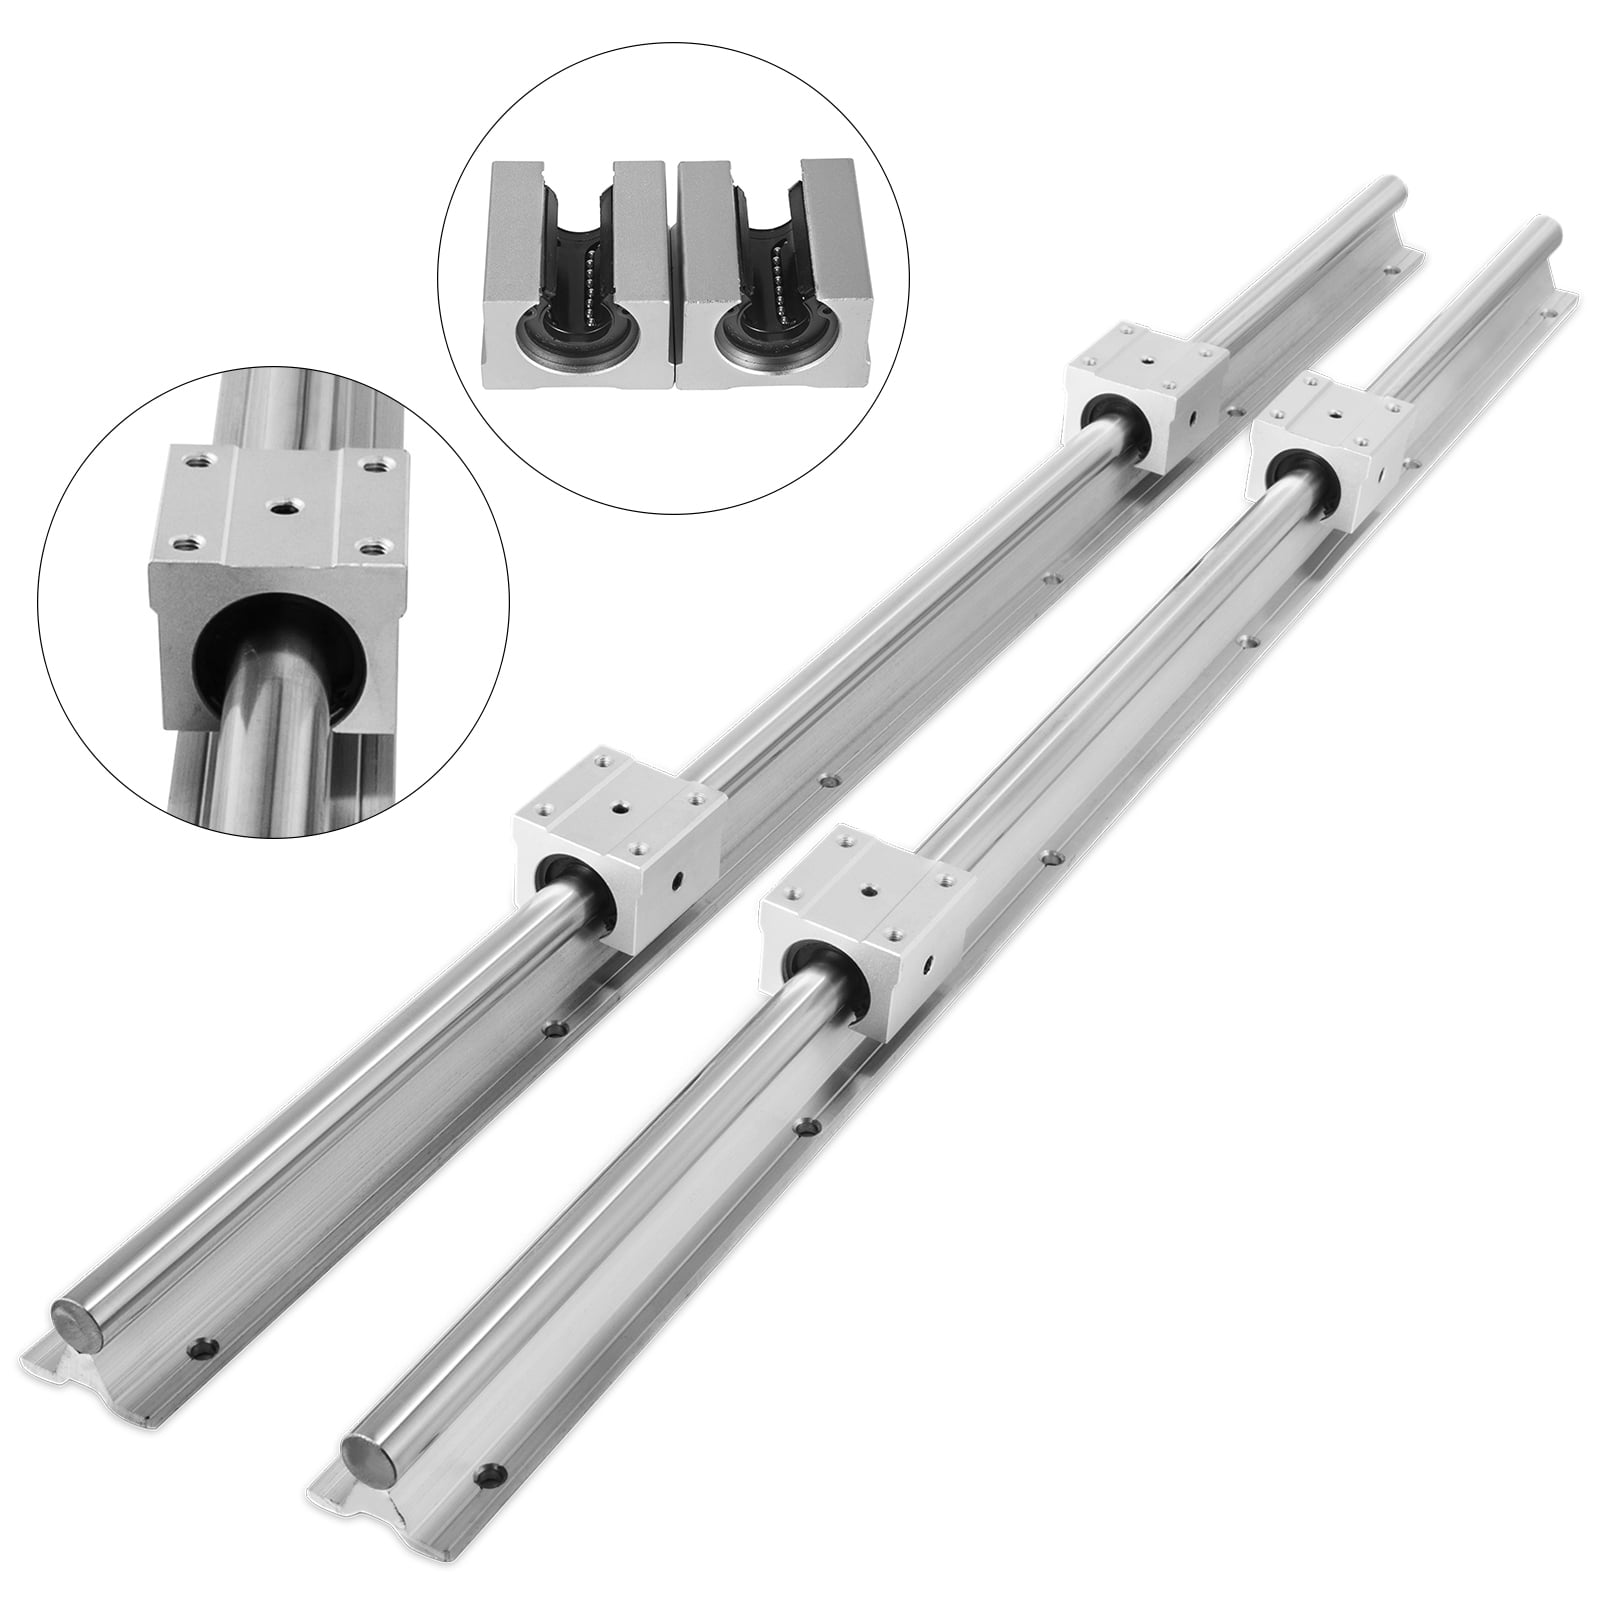 20mm linear slide guide shaft SBR 20-650mm 2 rail+4SBR20UU bearing block CNC set 